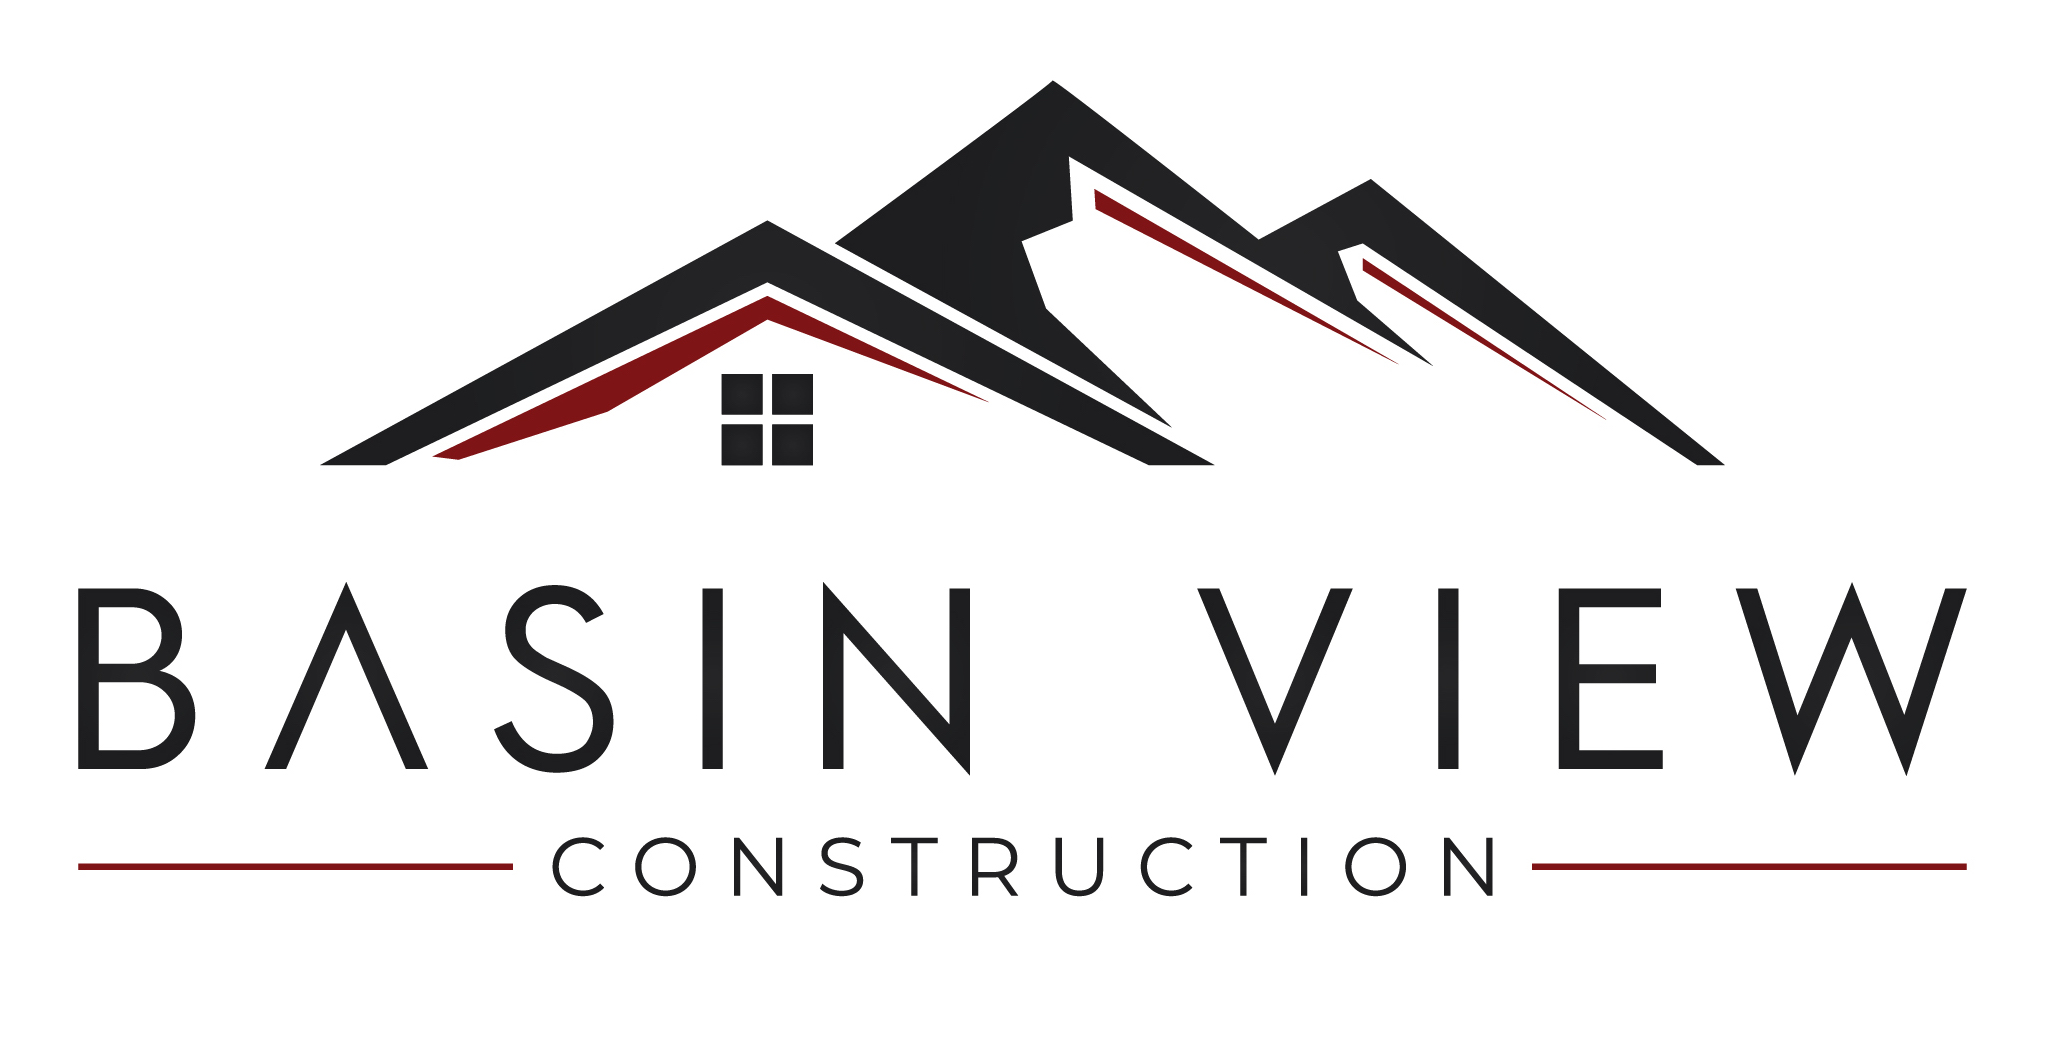 BASIN VIEW CONSTRUCTION